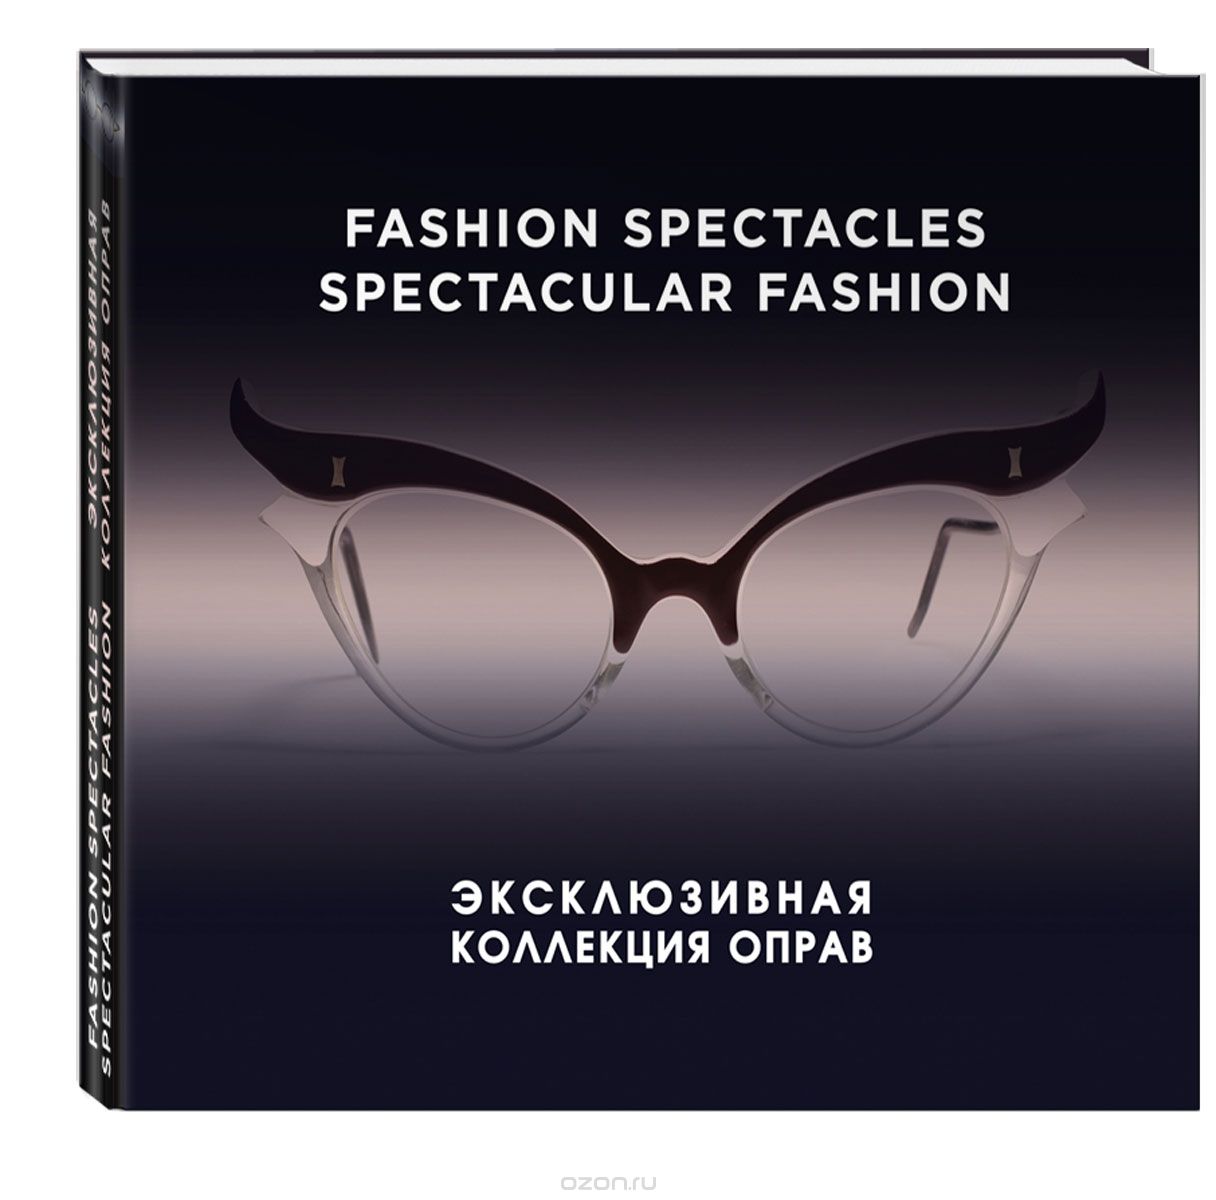 Fashion Spectacles, Spectacular Fashion. Эксклюзивная коллекция оправ, Саймон Мюррэй, Никки Албретчсен